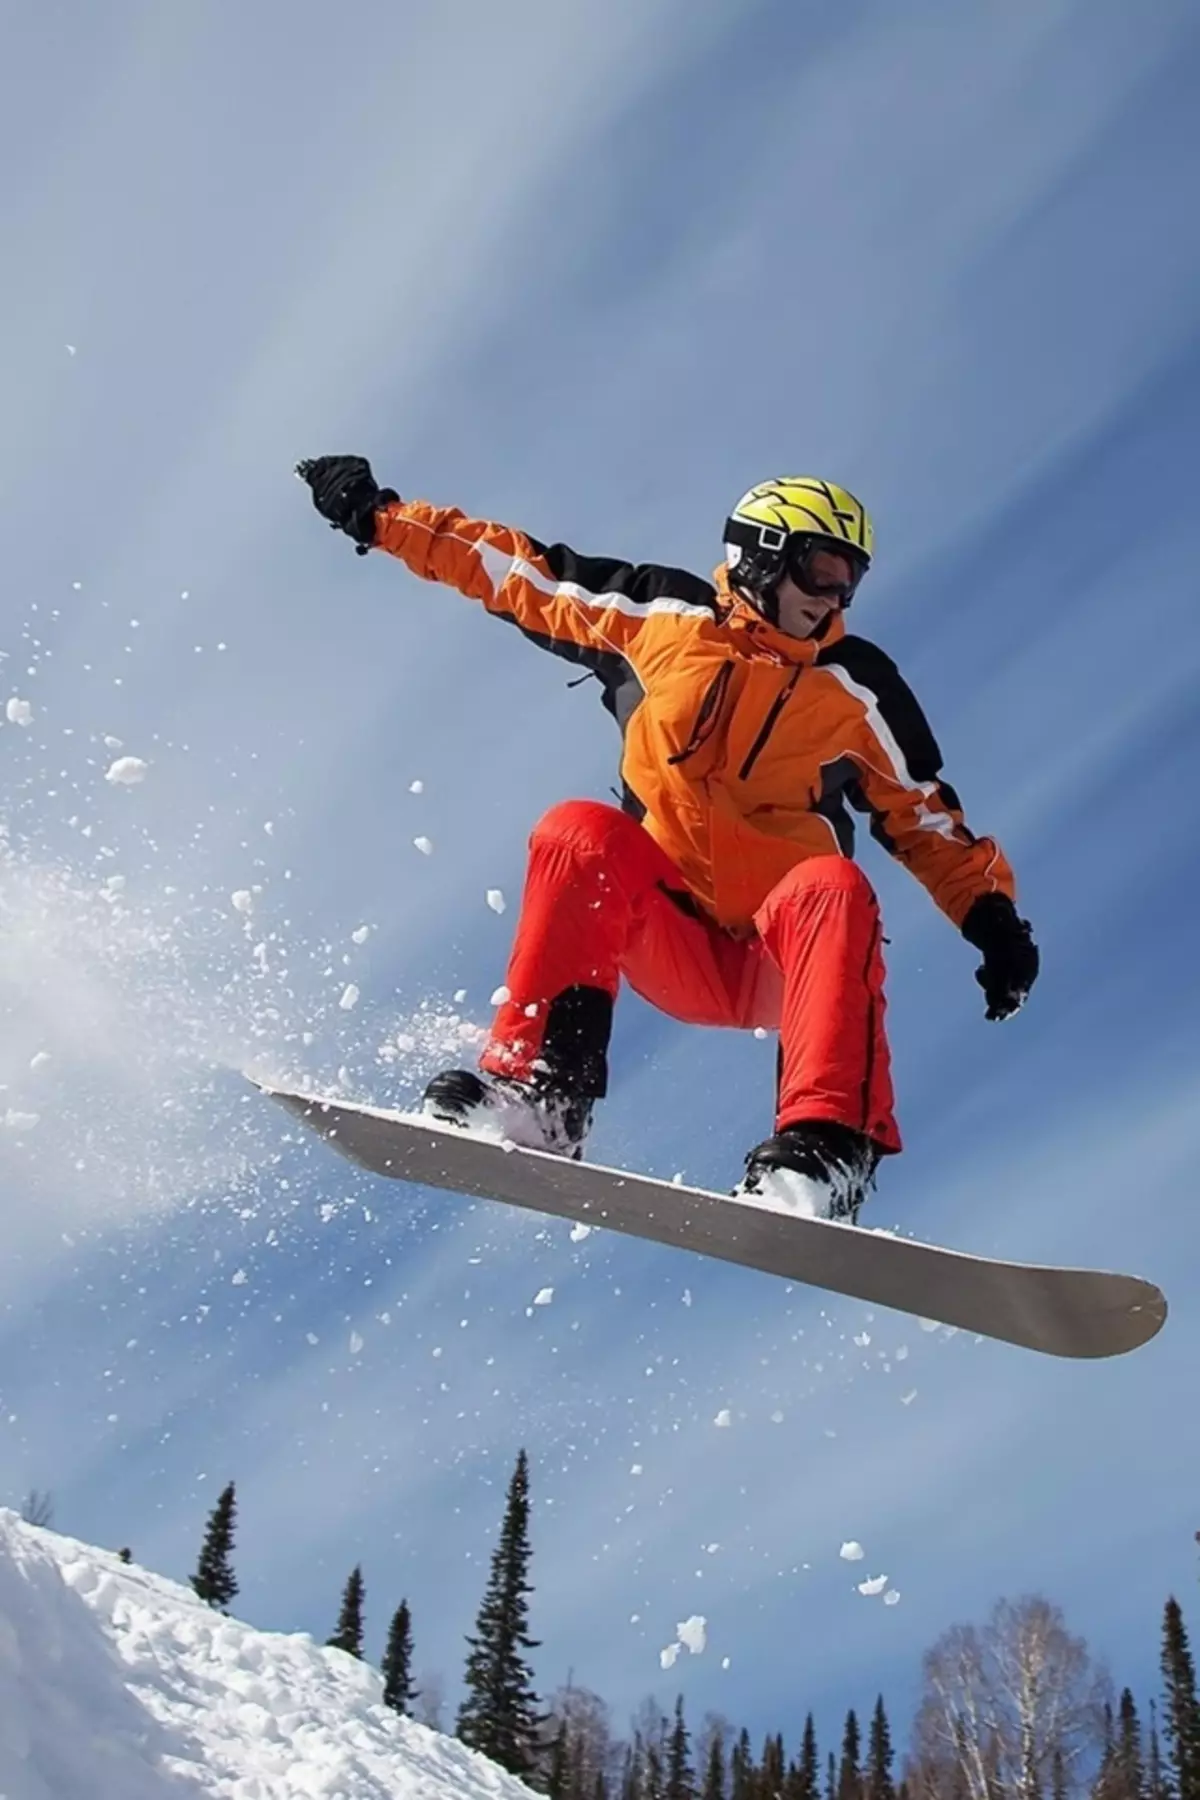 Botas de Snowboard (119 fotos): Como escolher botas de snowboard para mulheres, modelo Nike, Adidas e outras marcas populares 15127_15